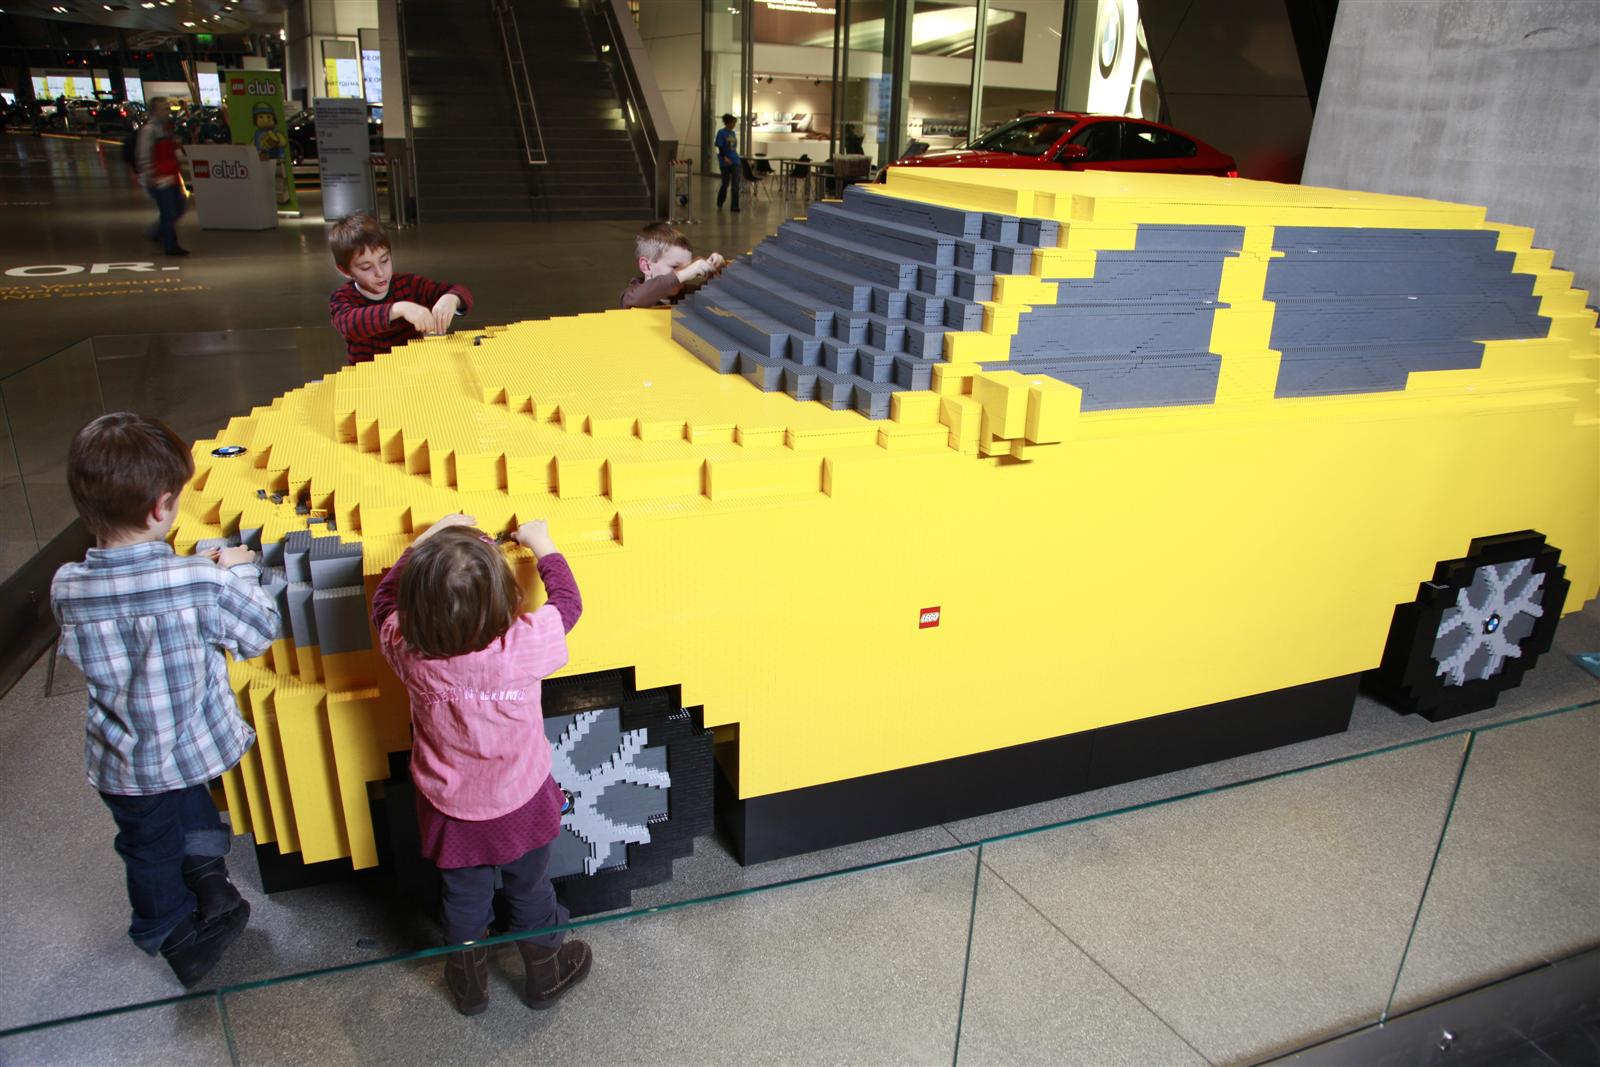 Bære hente smeltet Kids Use 165,000 Bricks To Build World's Largest LEGO BMW X1